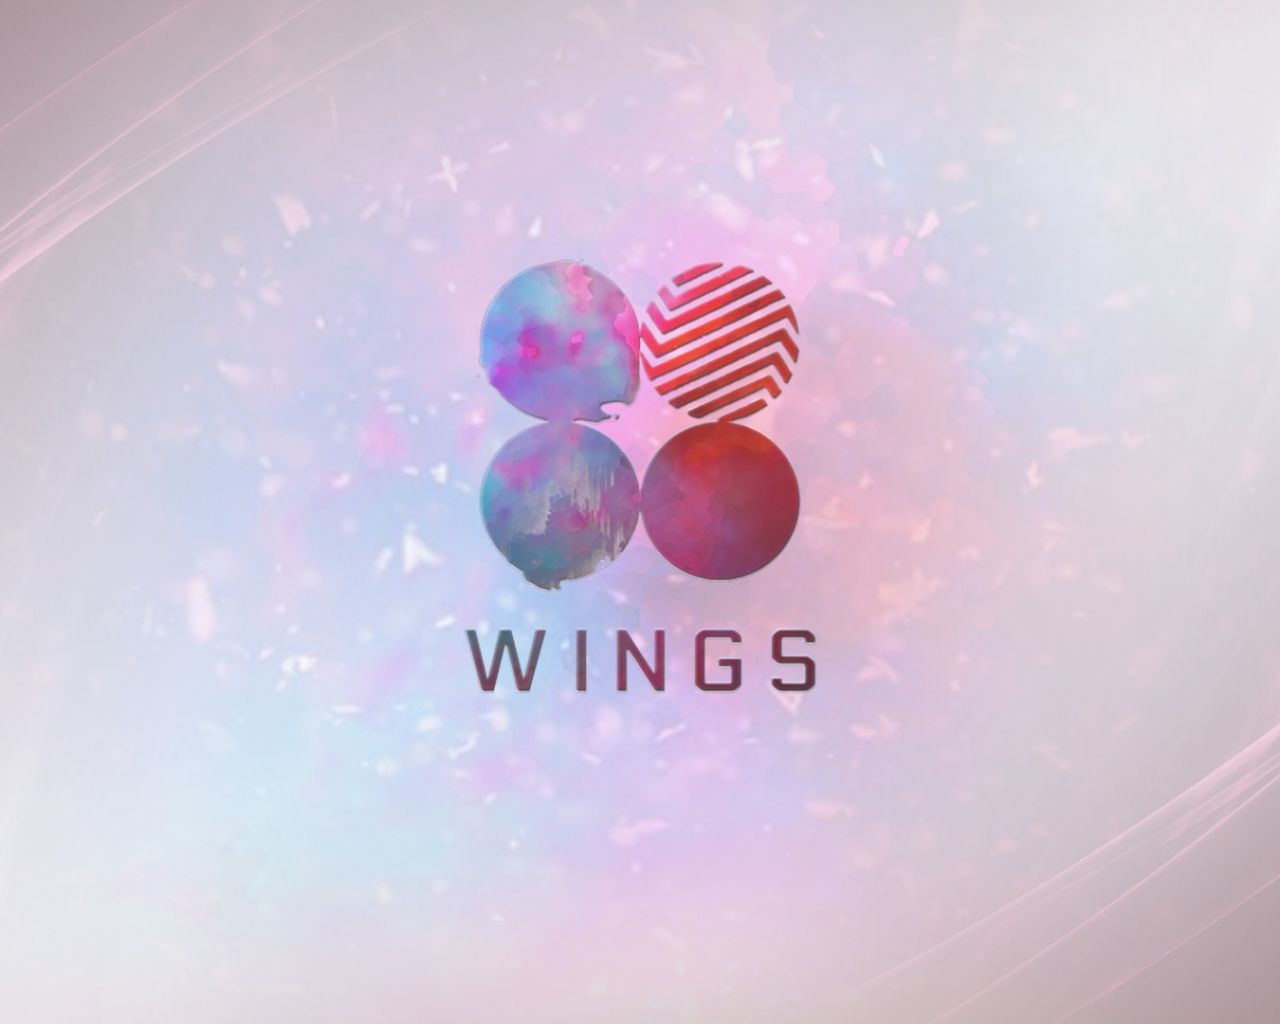 Free download Bts Wings Wallpaper - [1920x1080]